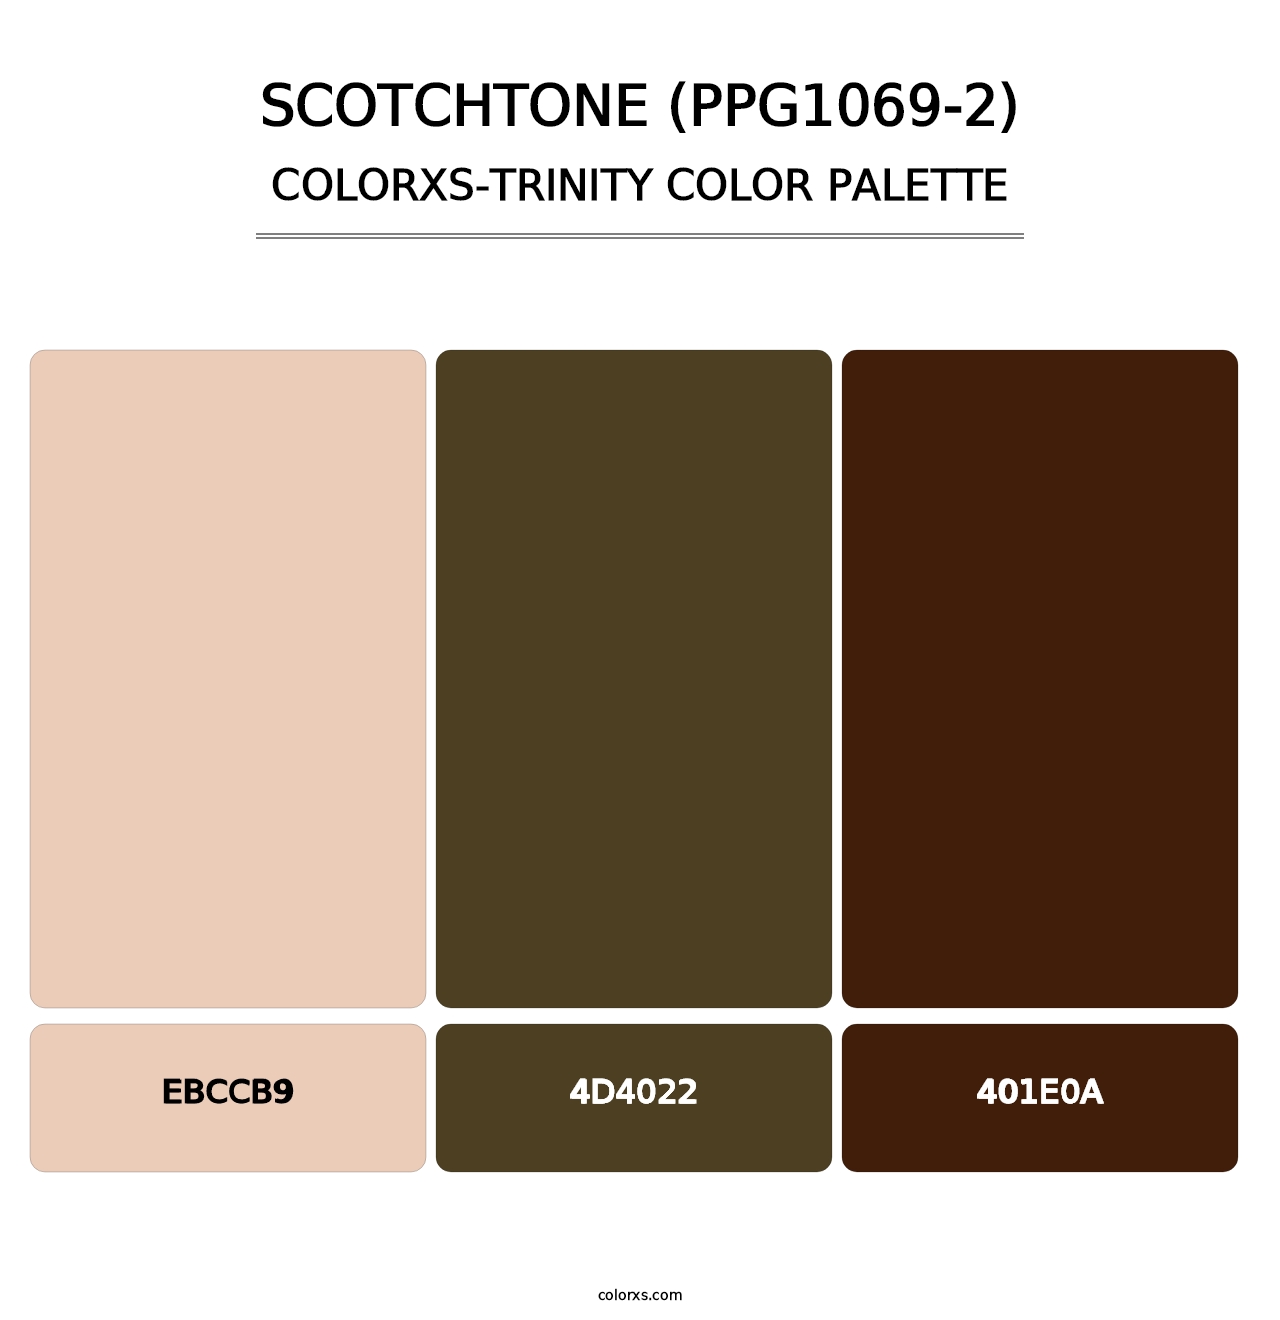 Scotchtone (PPG1069-2) - Colorxs Trinity Palette